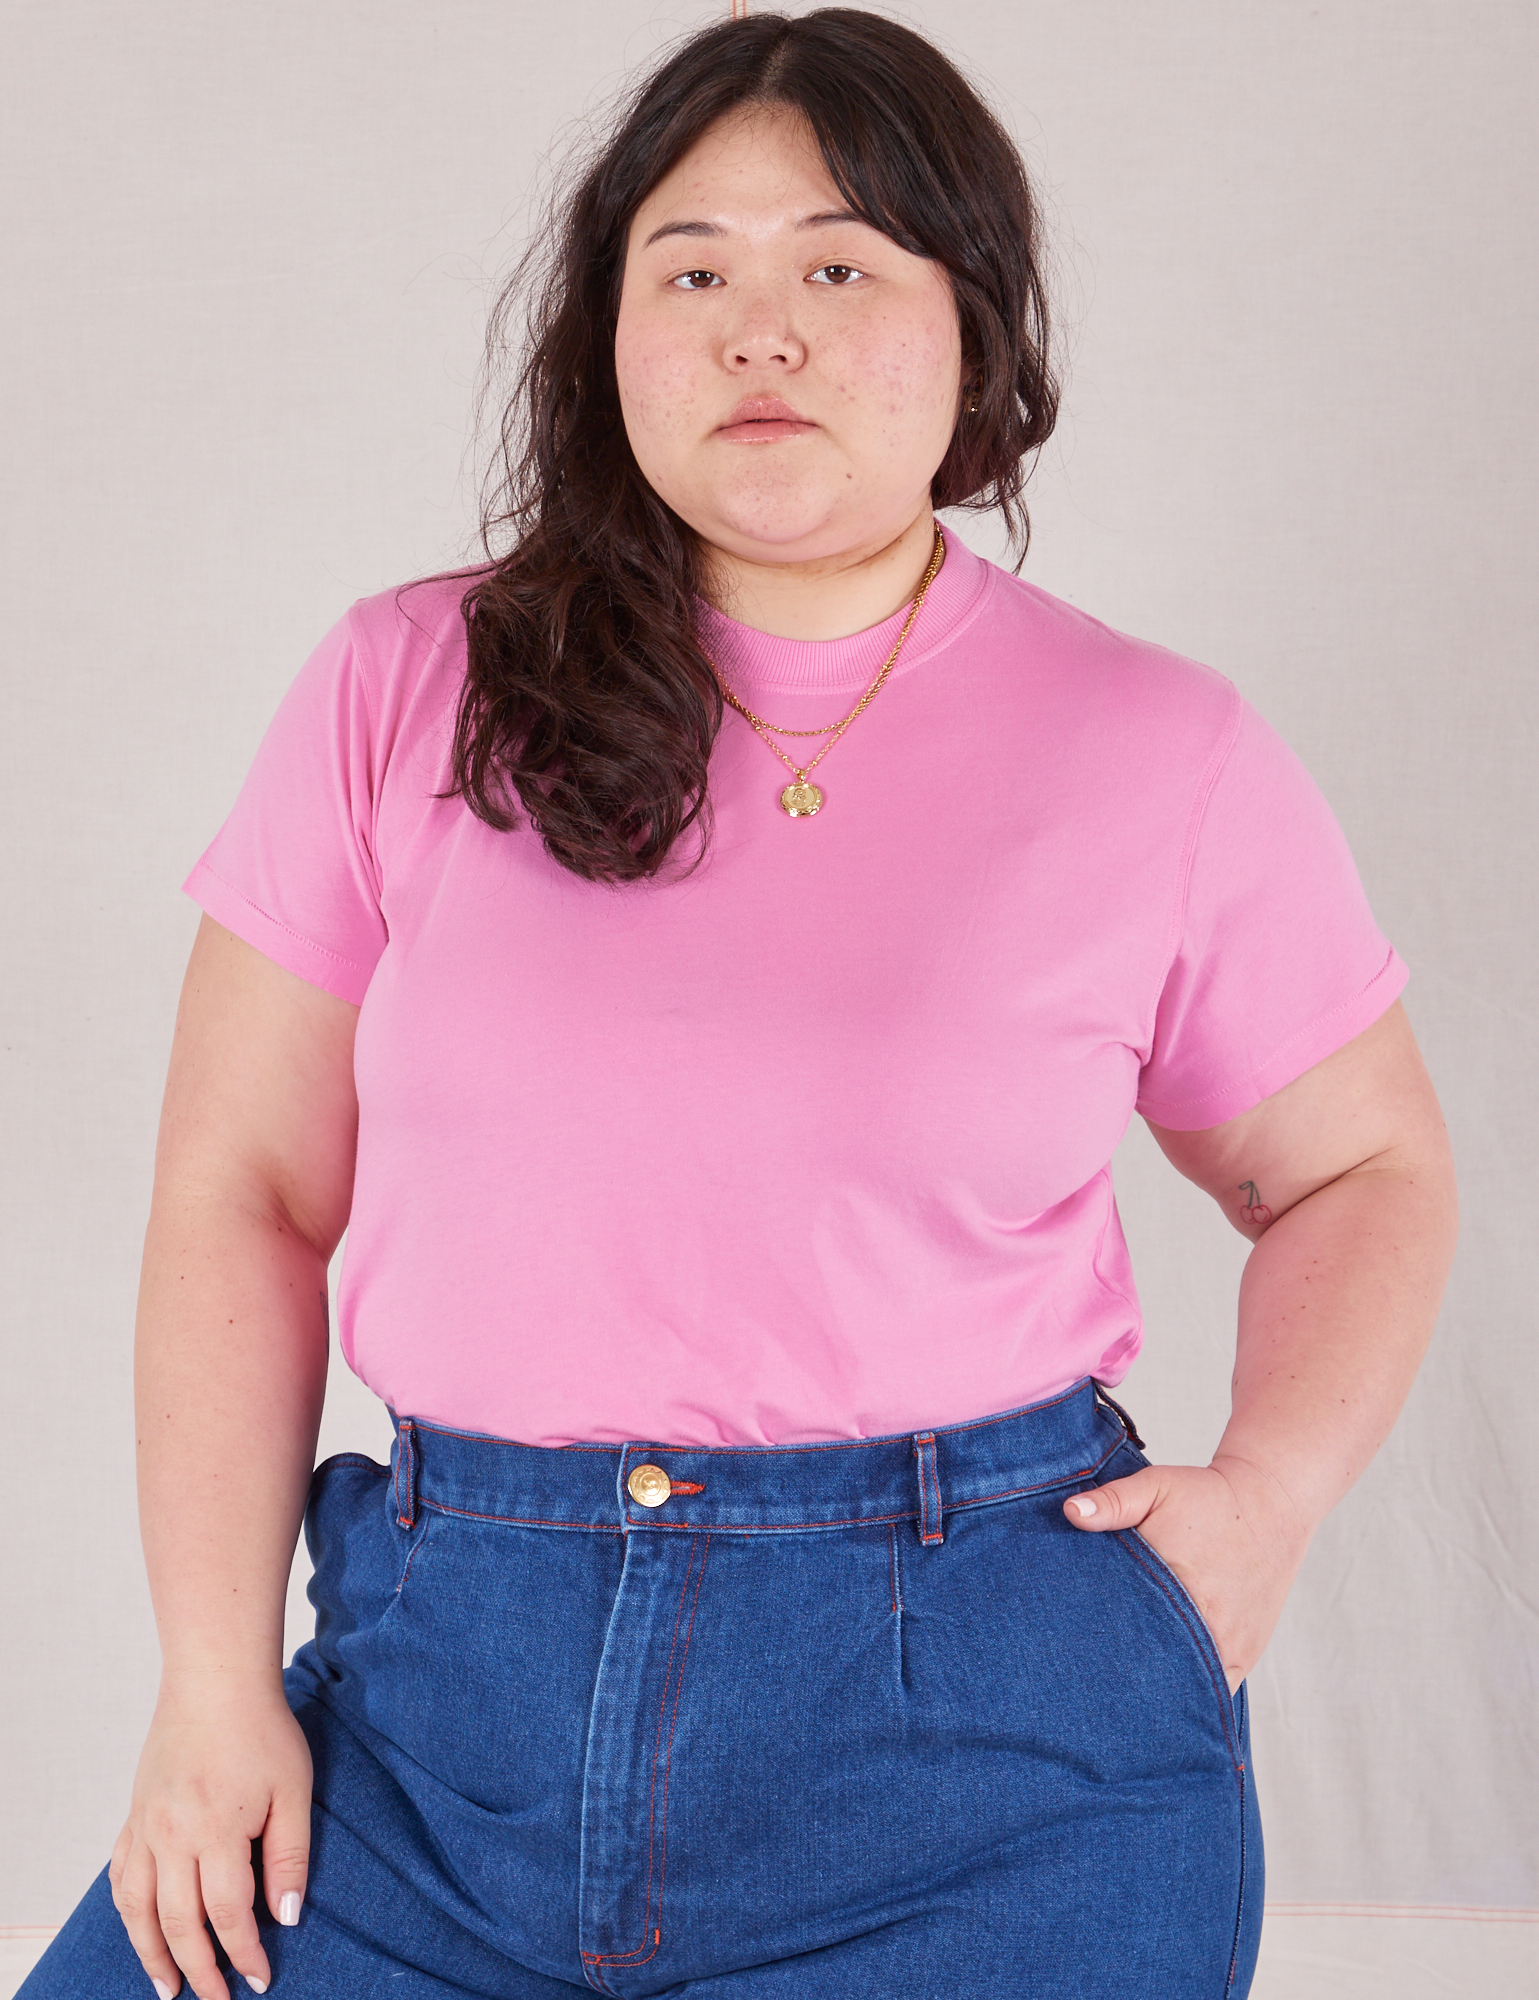 Ashley is wearing Organic Vintage Tee in Bubblegum Pink tucked into dark wash Trouser Jeans